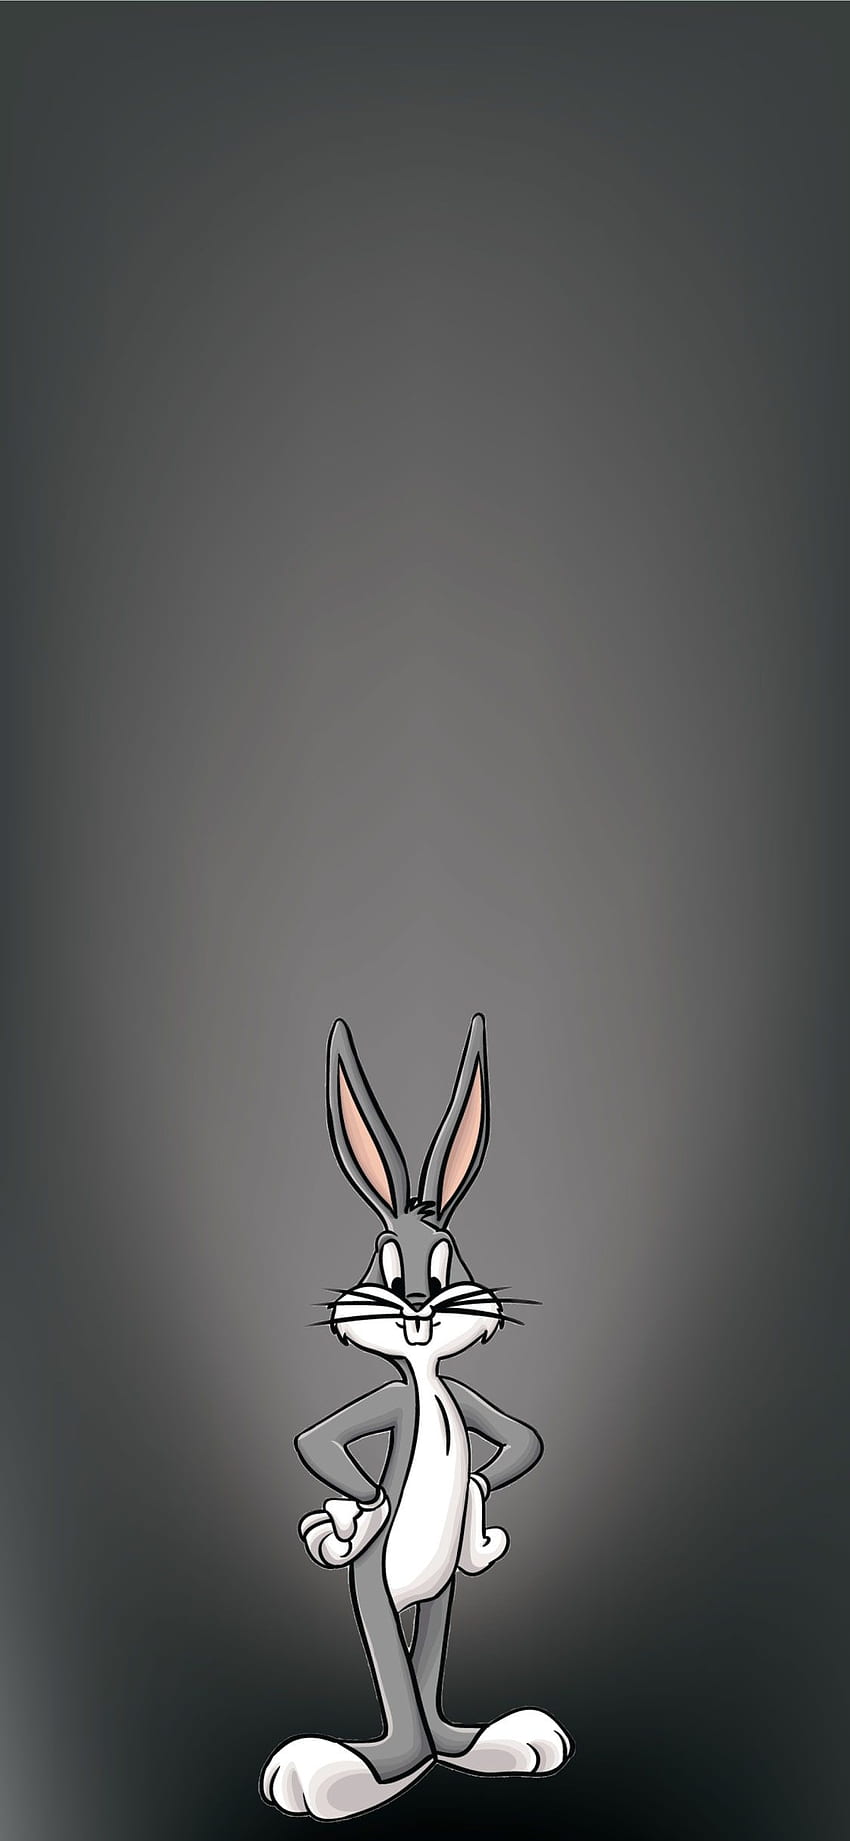 Bugs bunny wallpaper  Bunny wallpaper Cartoon wallpaper Cartoon wallpaper  iphone